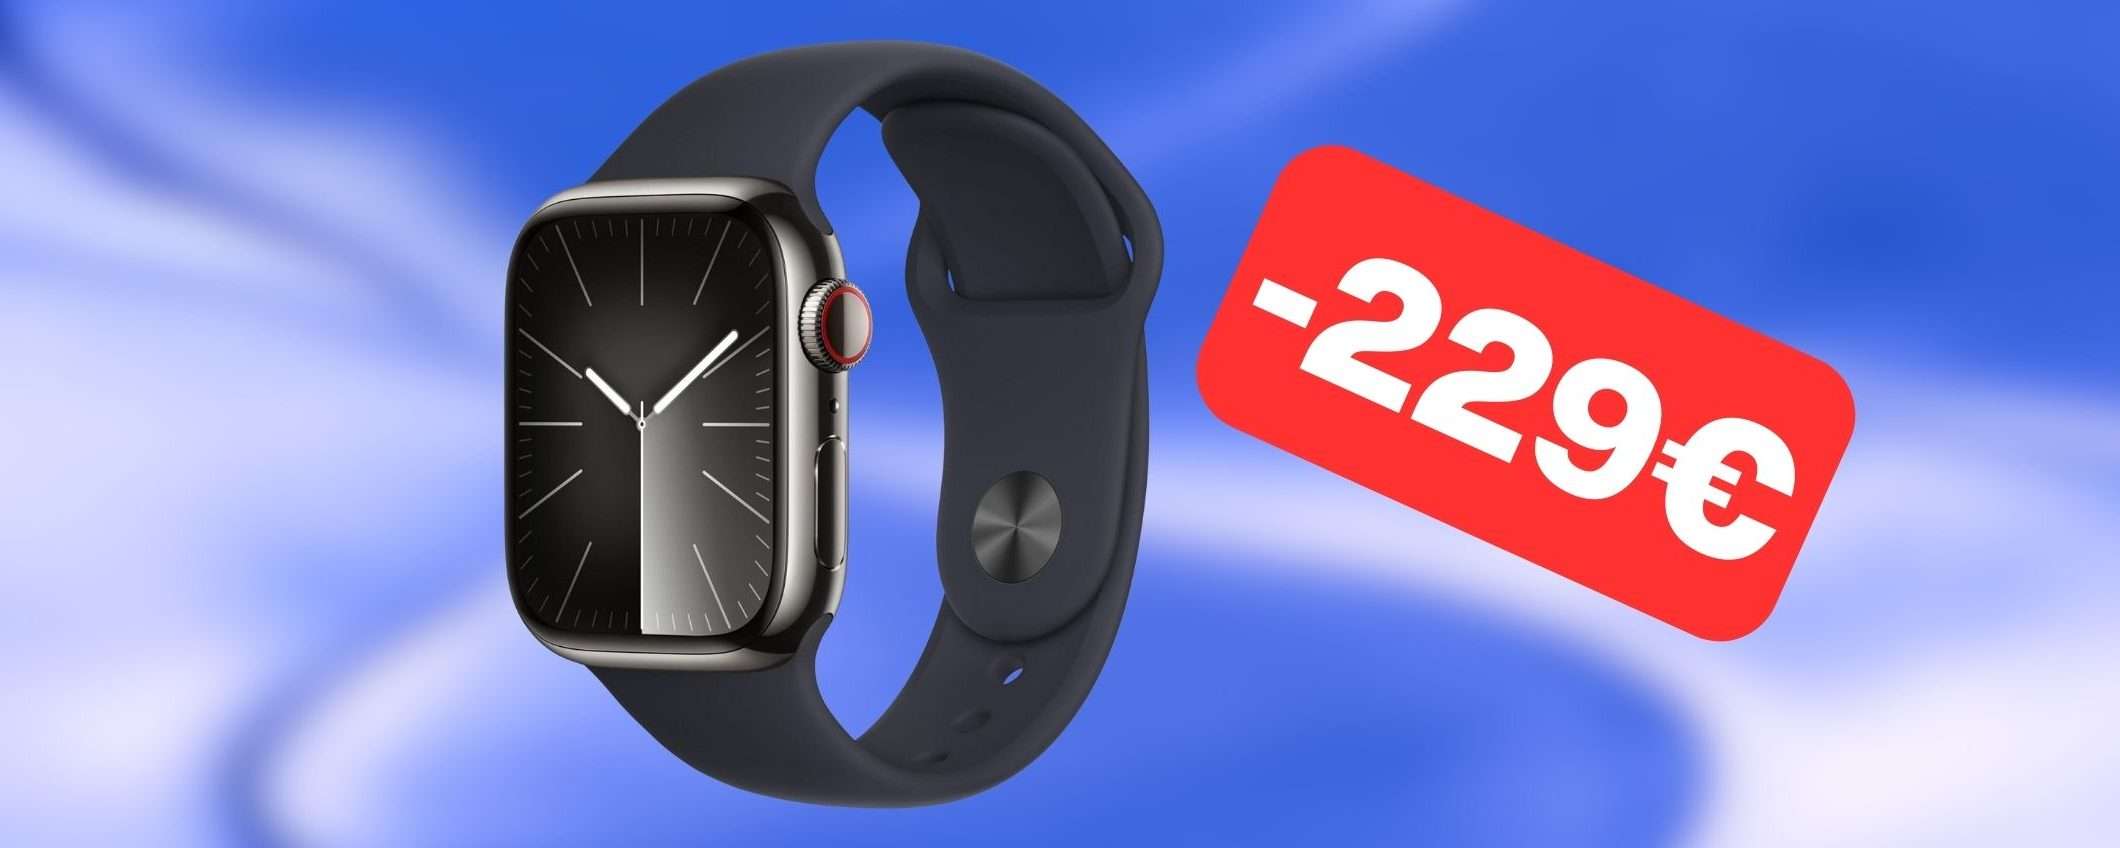 Apple Watch 9 GPS + Cellular in OFFERTA BOMBA su Amazon (-229,01€)